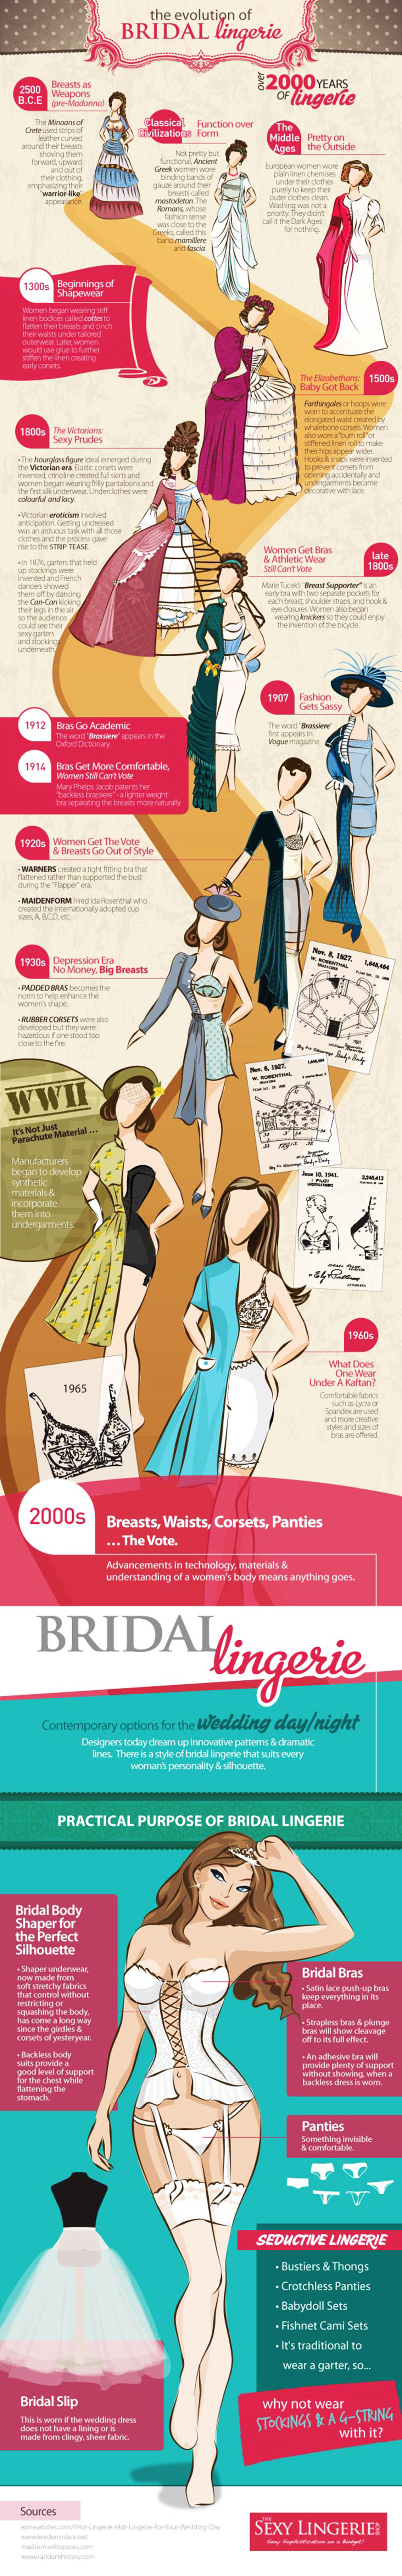 The Evolution of Bridal Lingerie Infographic